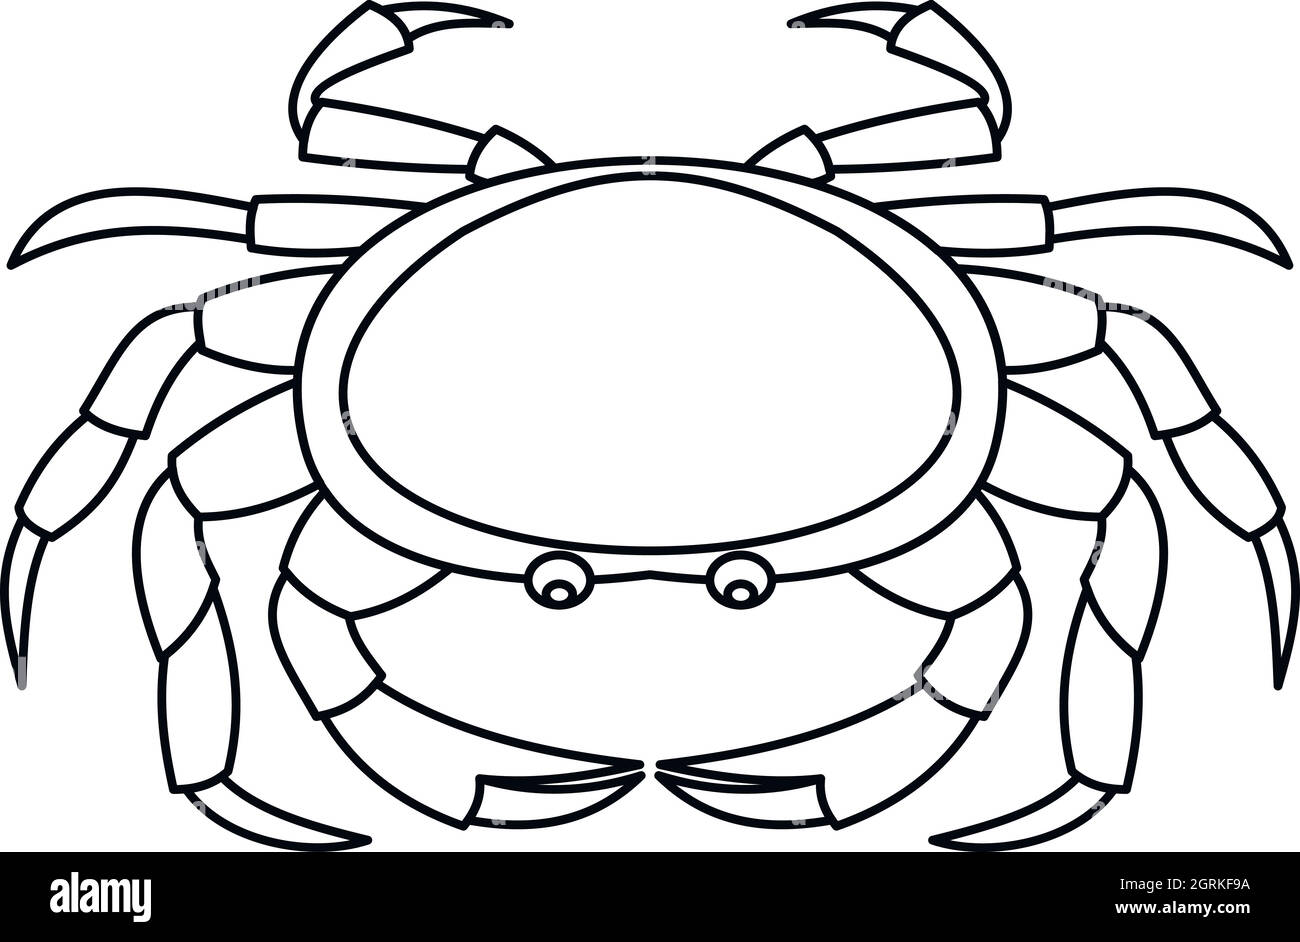 Krabben Sie-Meer Tier Symbol, Umriss-Stil Stock Vektor